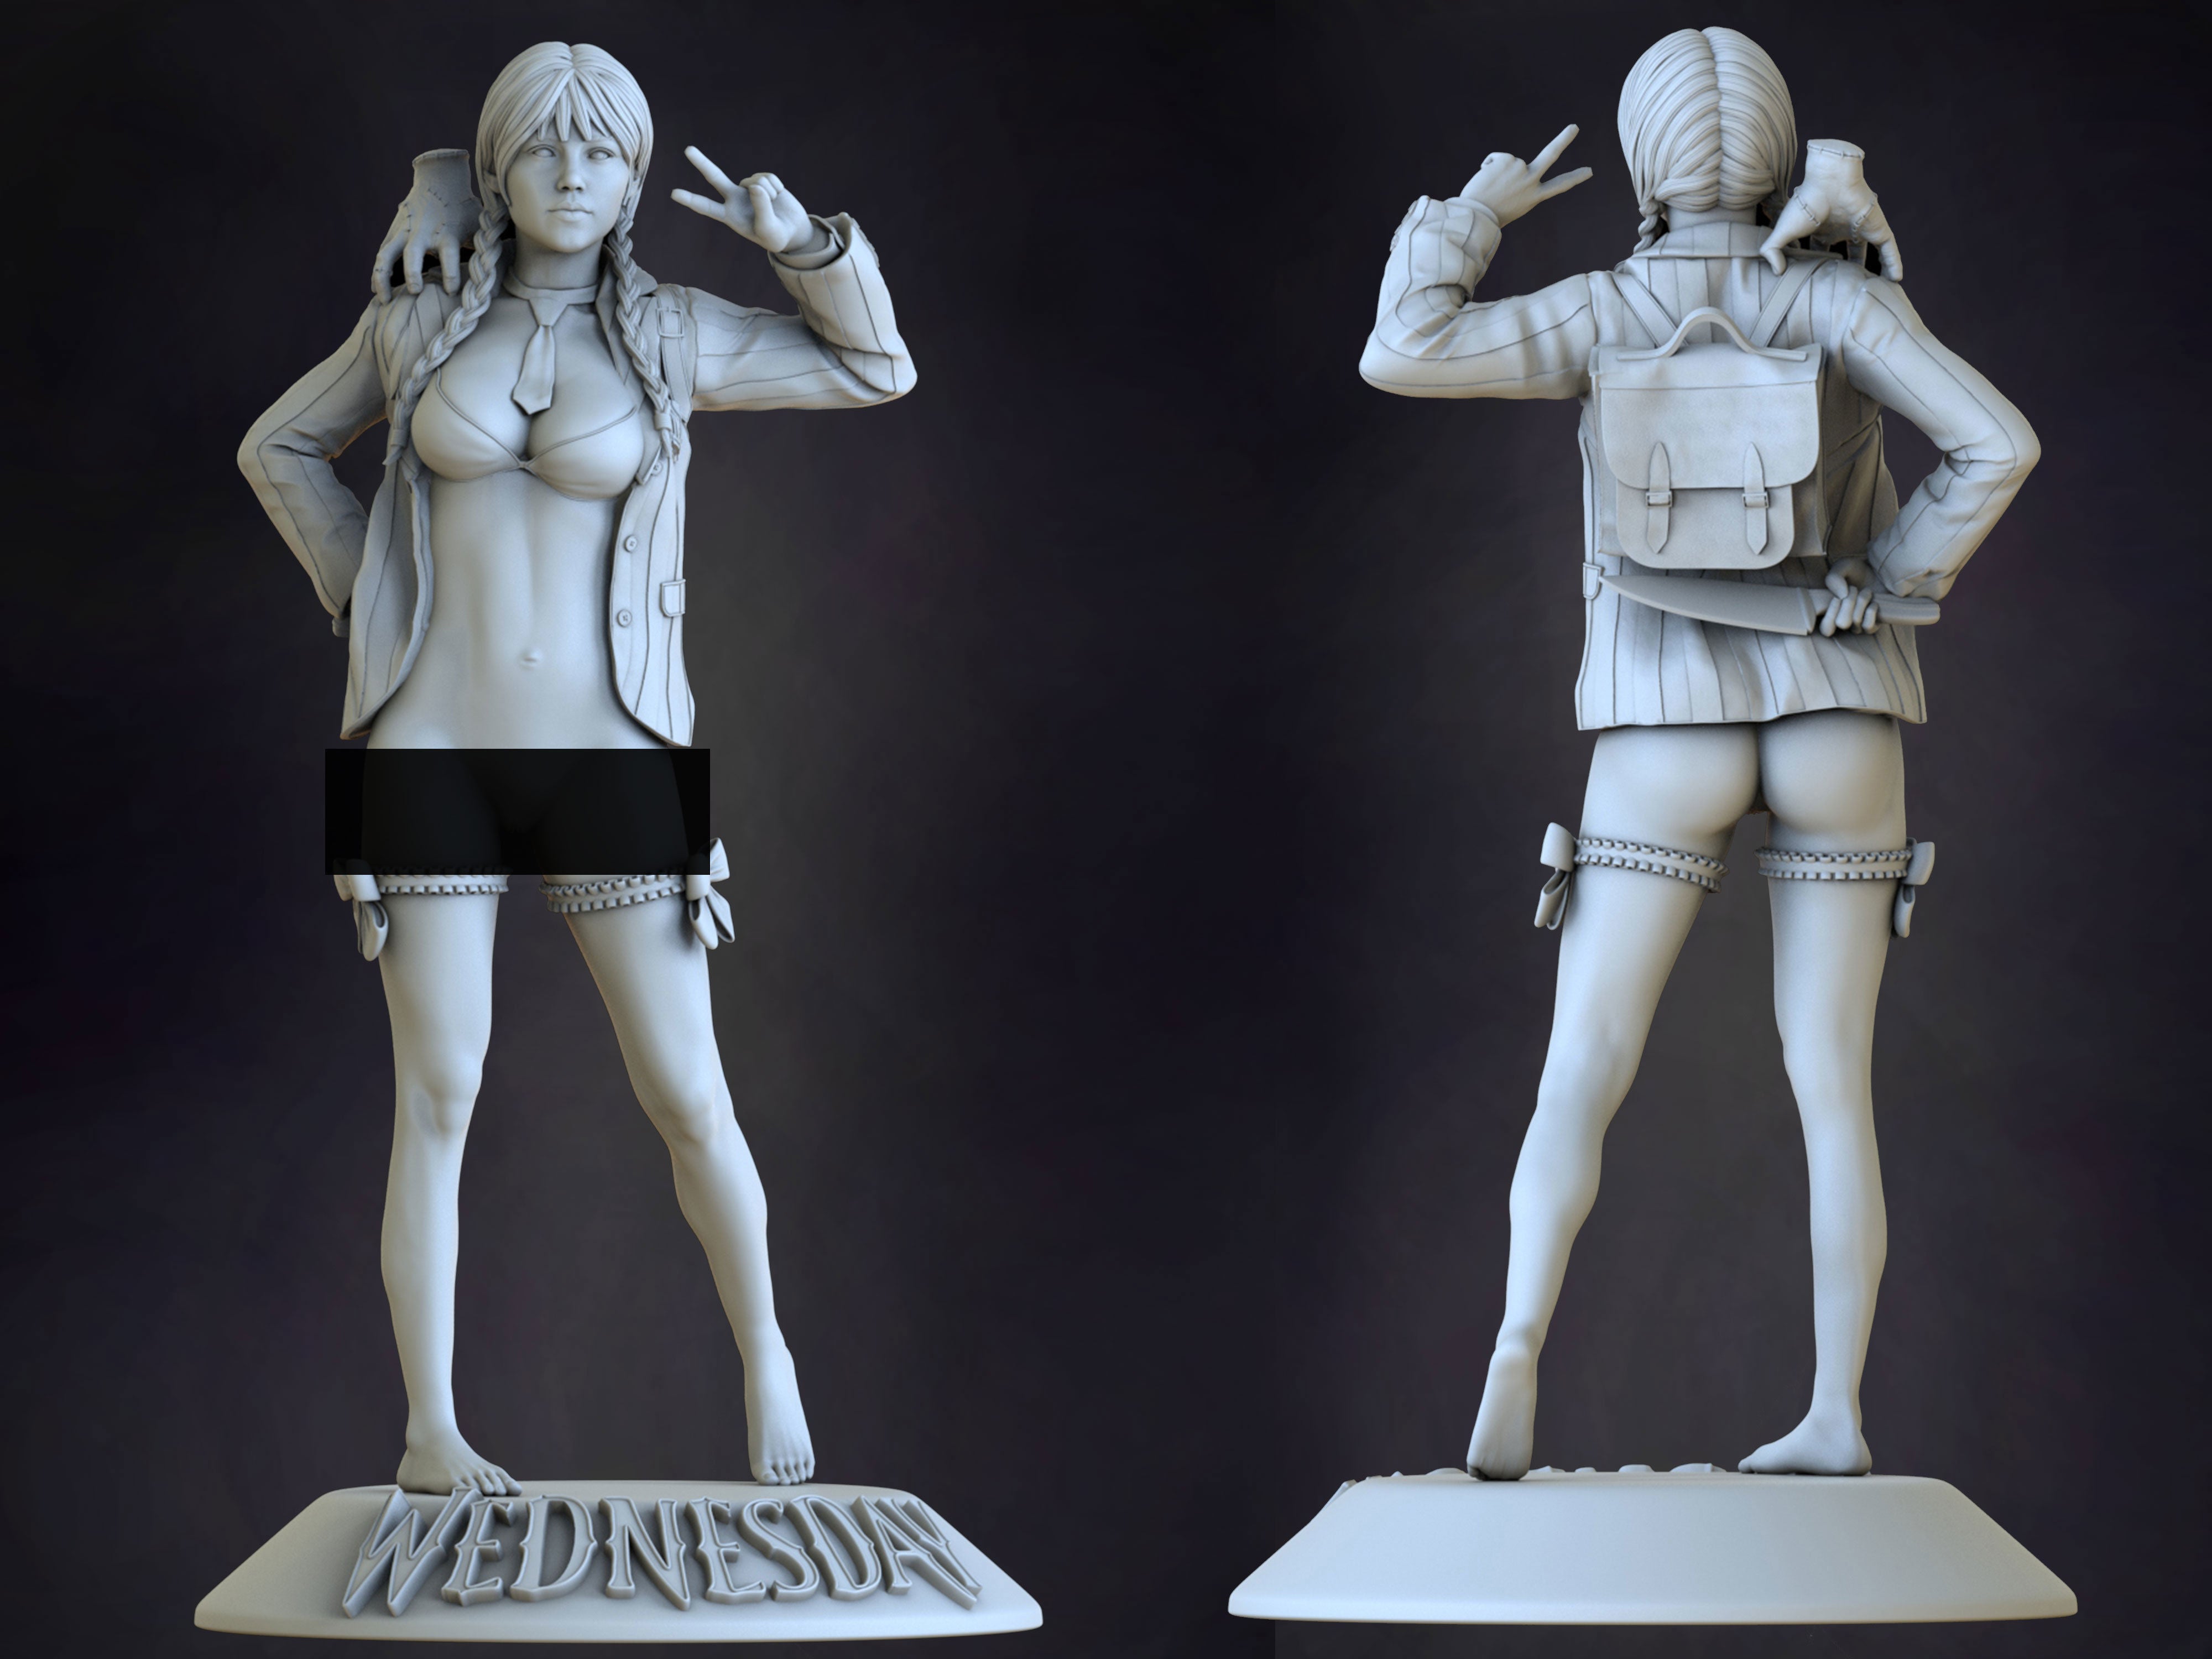 Wednesday Addams 3D Print model - Fan Art, SFW/NSFW - 180mm